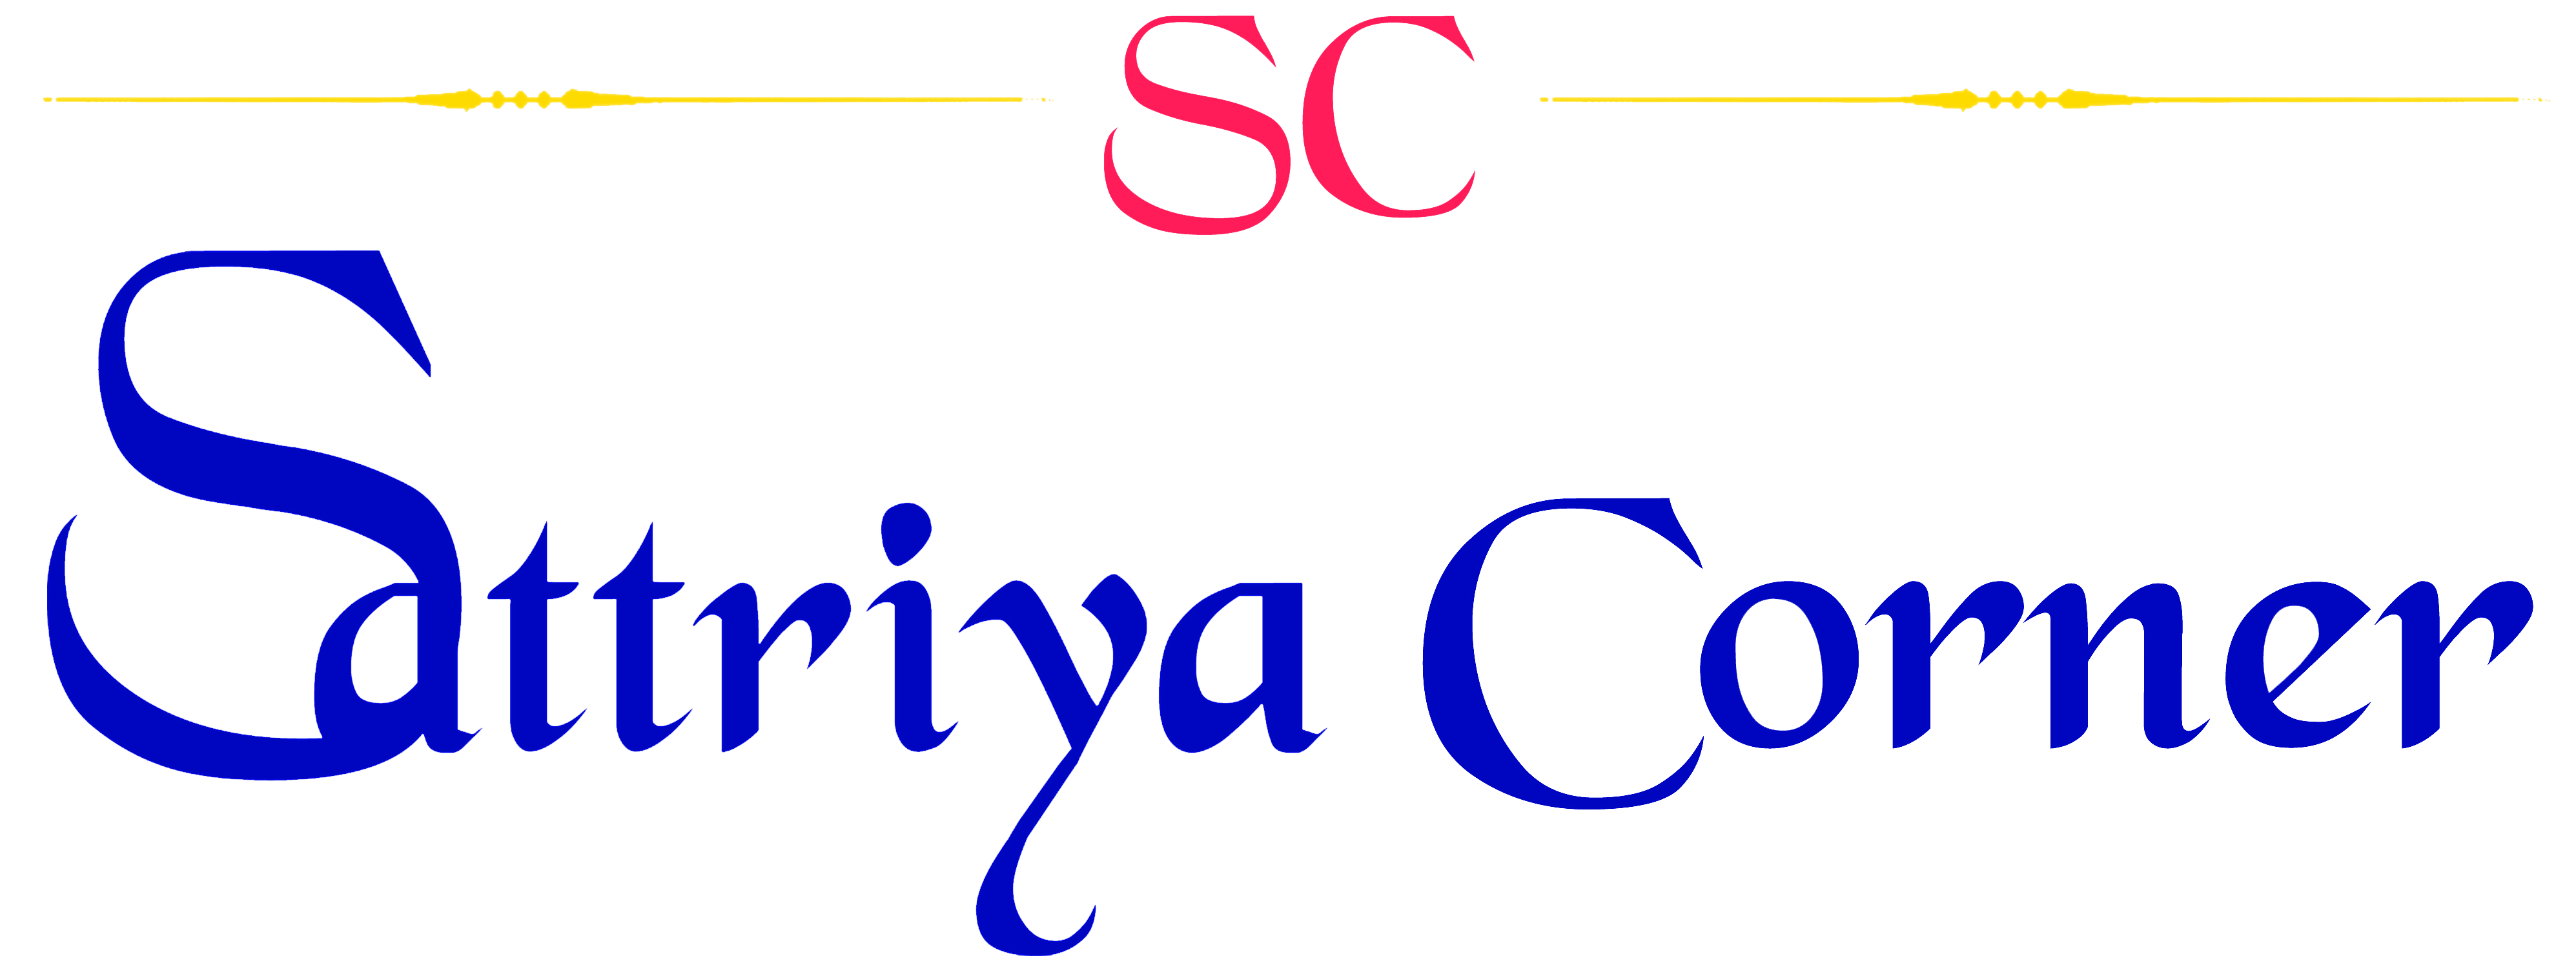 Sattriya Corner